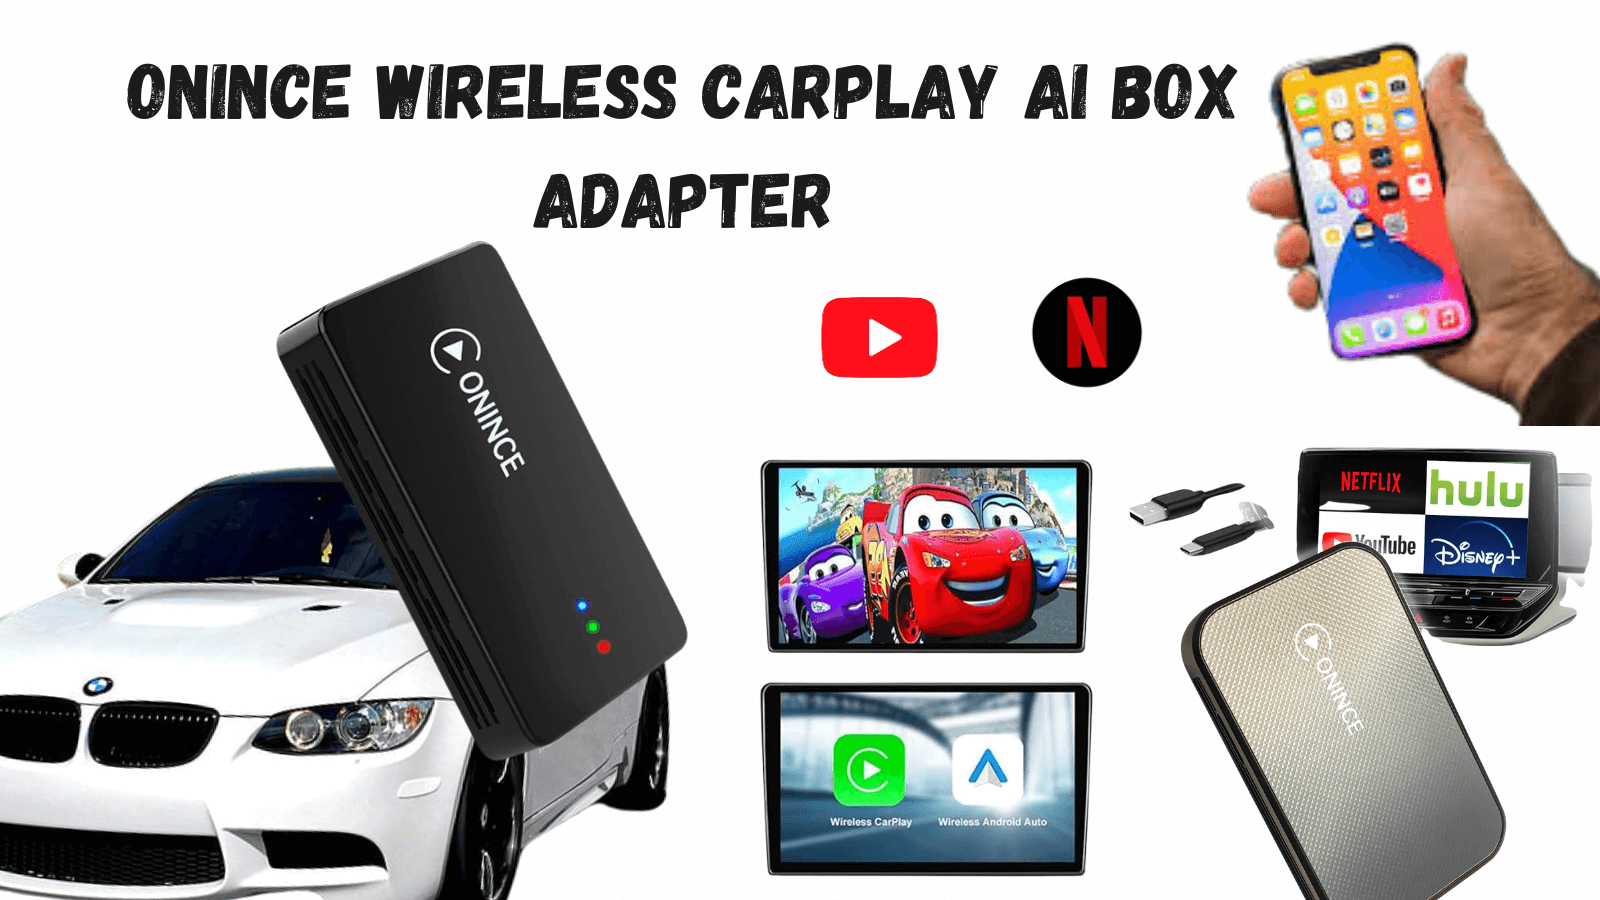 Onince wireless CarPlay Adapter for add any app on Carplay